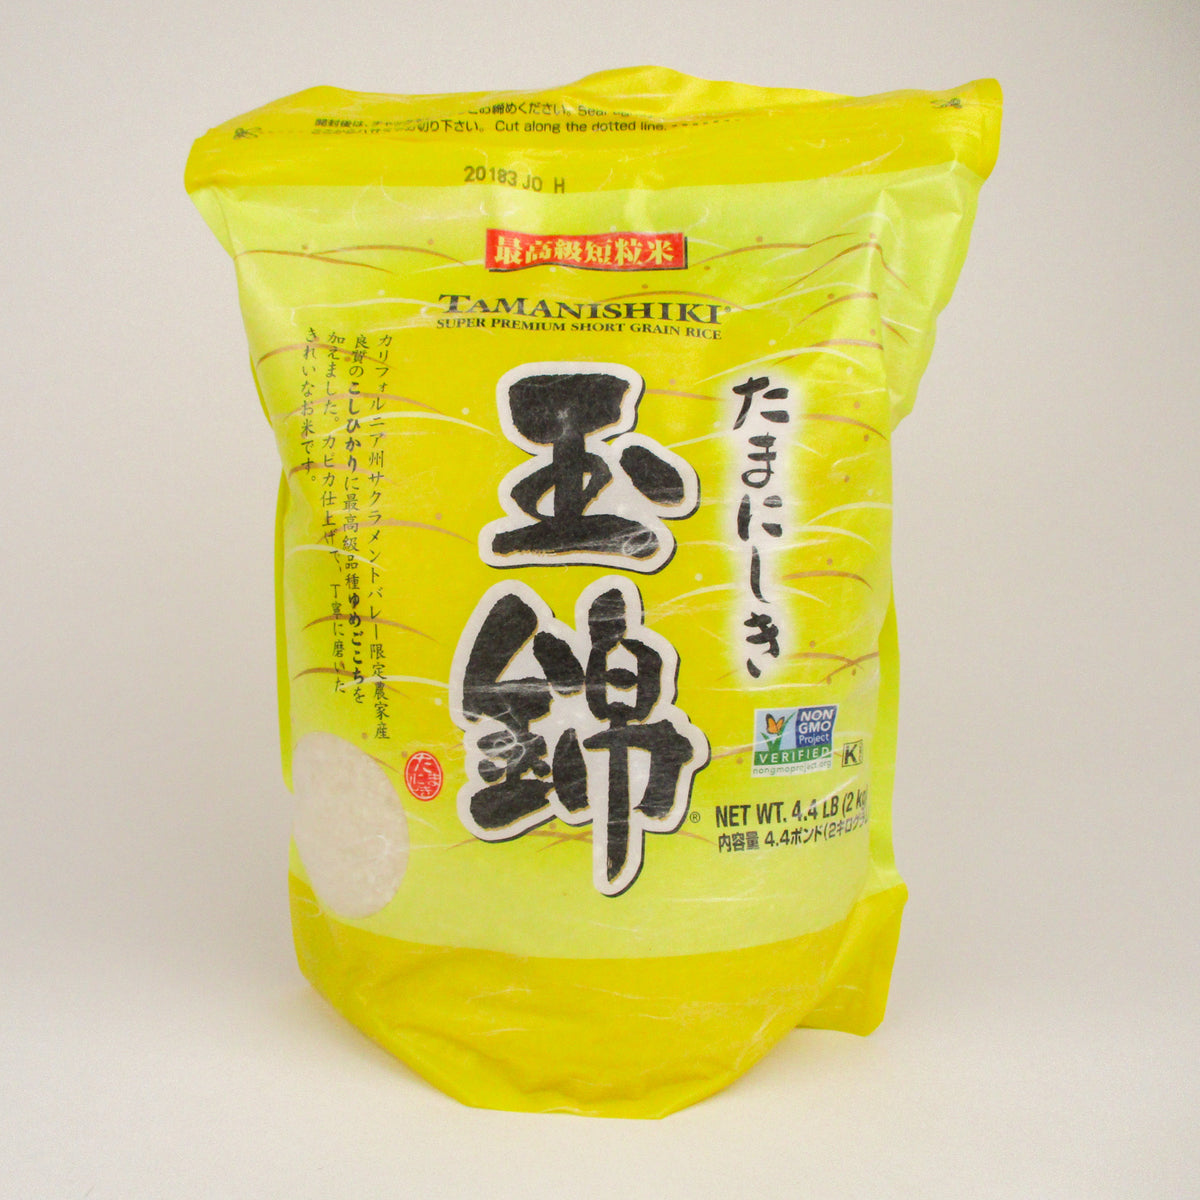 <!--2000--!>Rice - Tamanishiki Super Premium Short Grain Rice (sm)